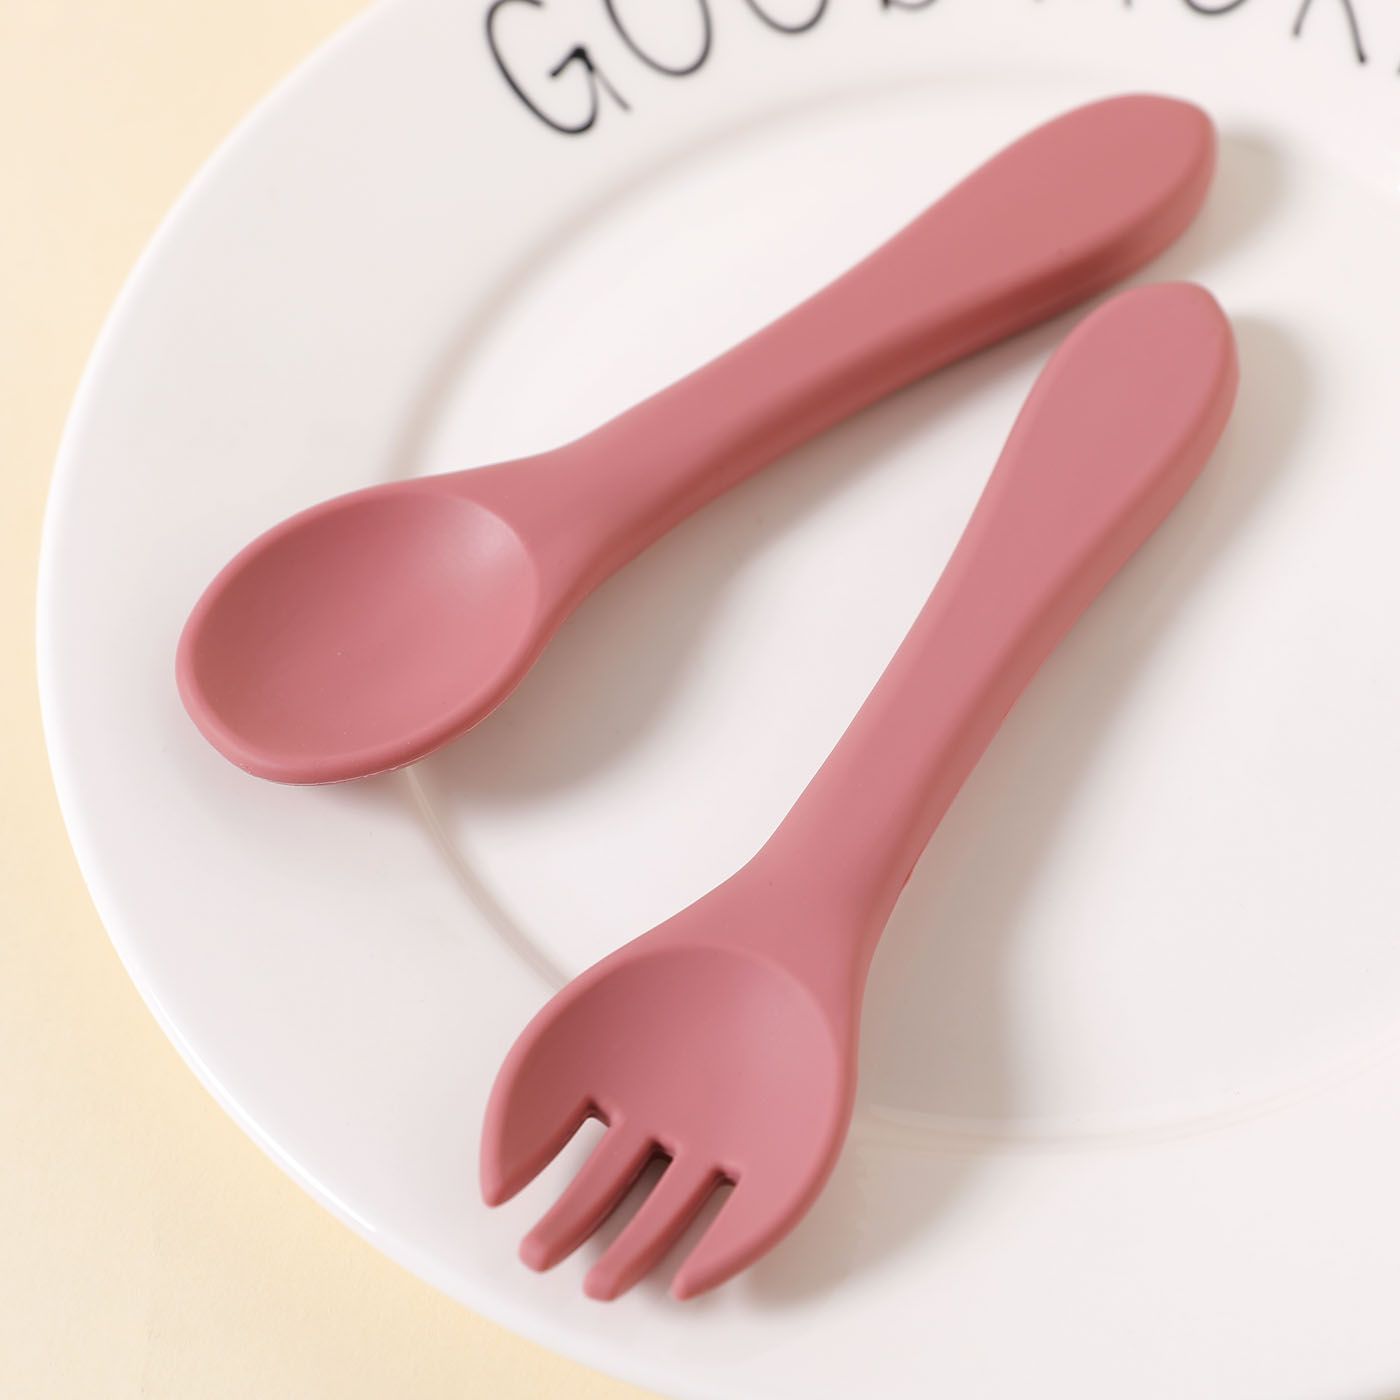 Food Grade Silicone Self-Feeding Spoon Fork Baby Toddler Utensils Training Utensils Set for Self-Tra